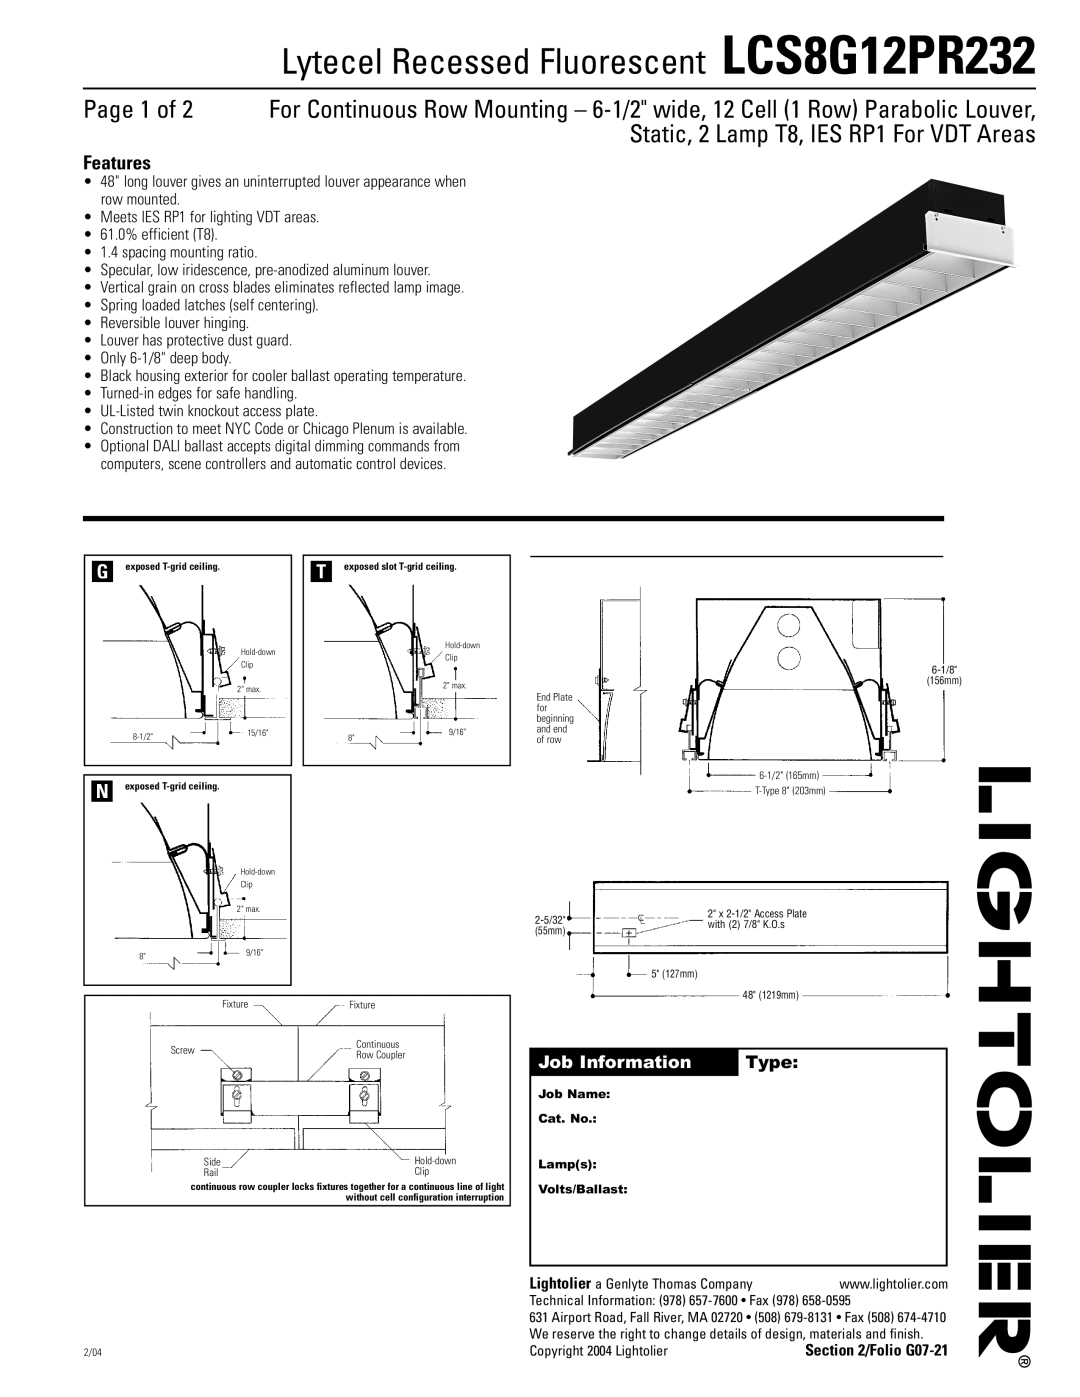 Lightolier manual Features, Job Information, Type, Lytecel Recessed Fluorescent LCS8G12PR232 